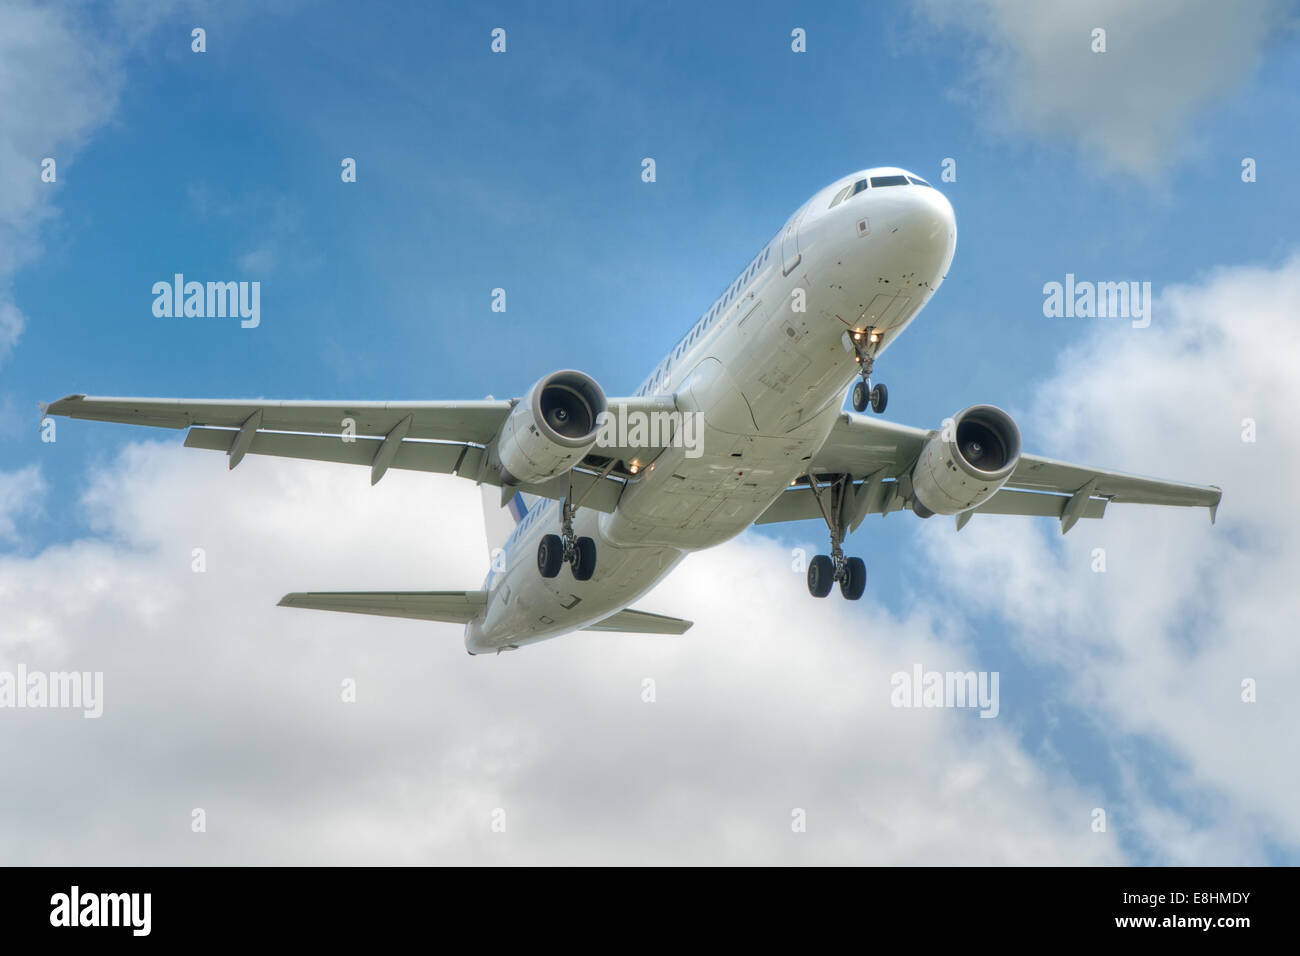 Big jet aereo decollare su blu cielo nuvoloso nackground Foto Stock